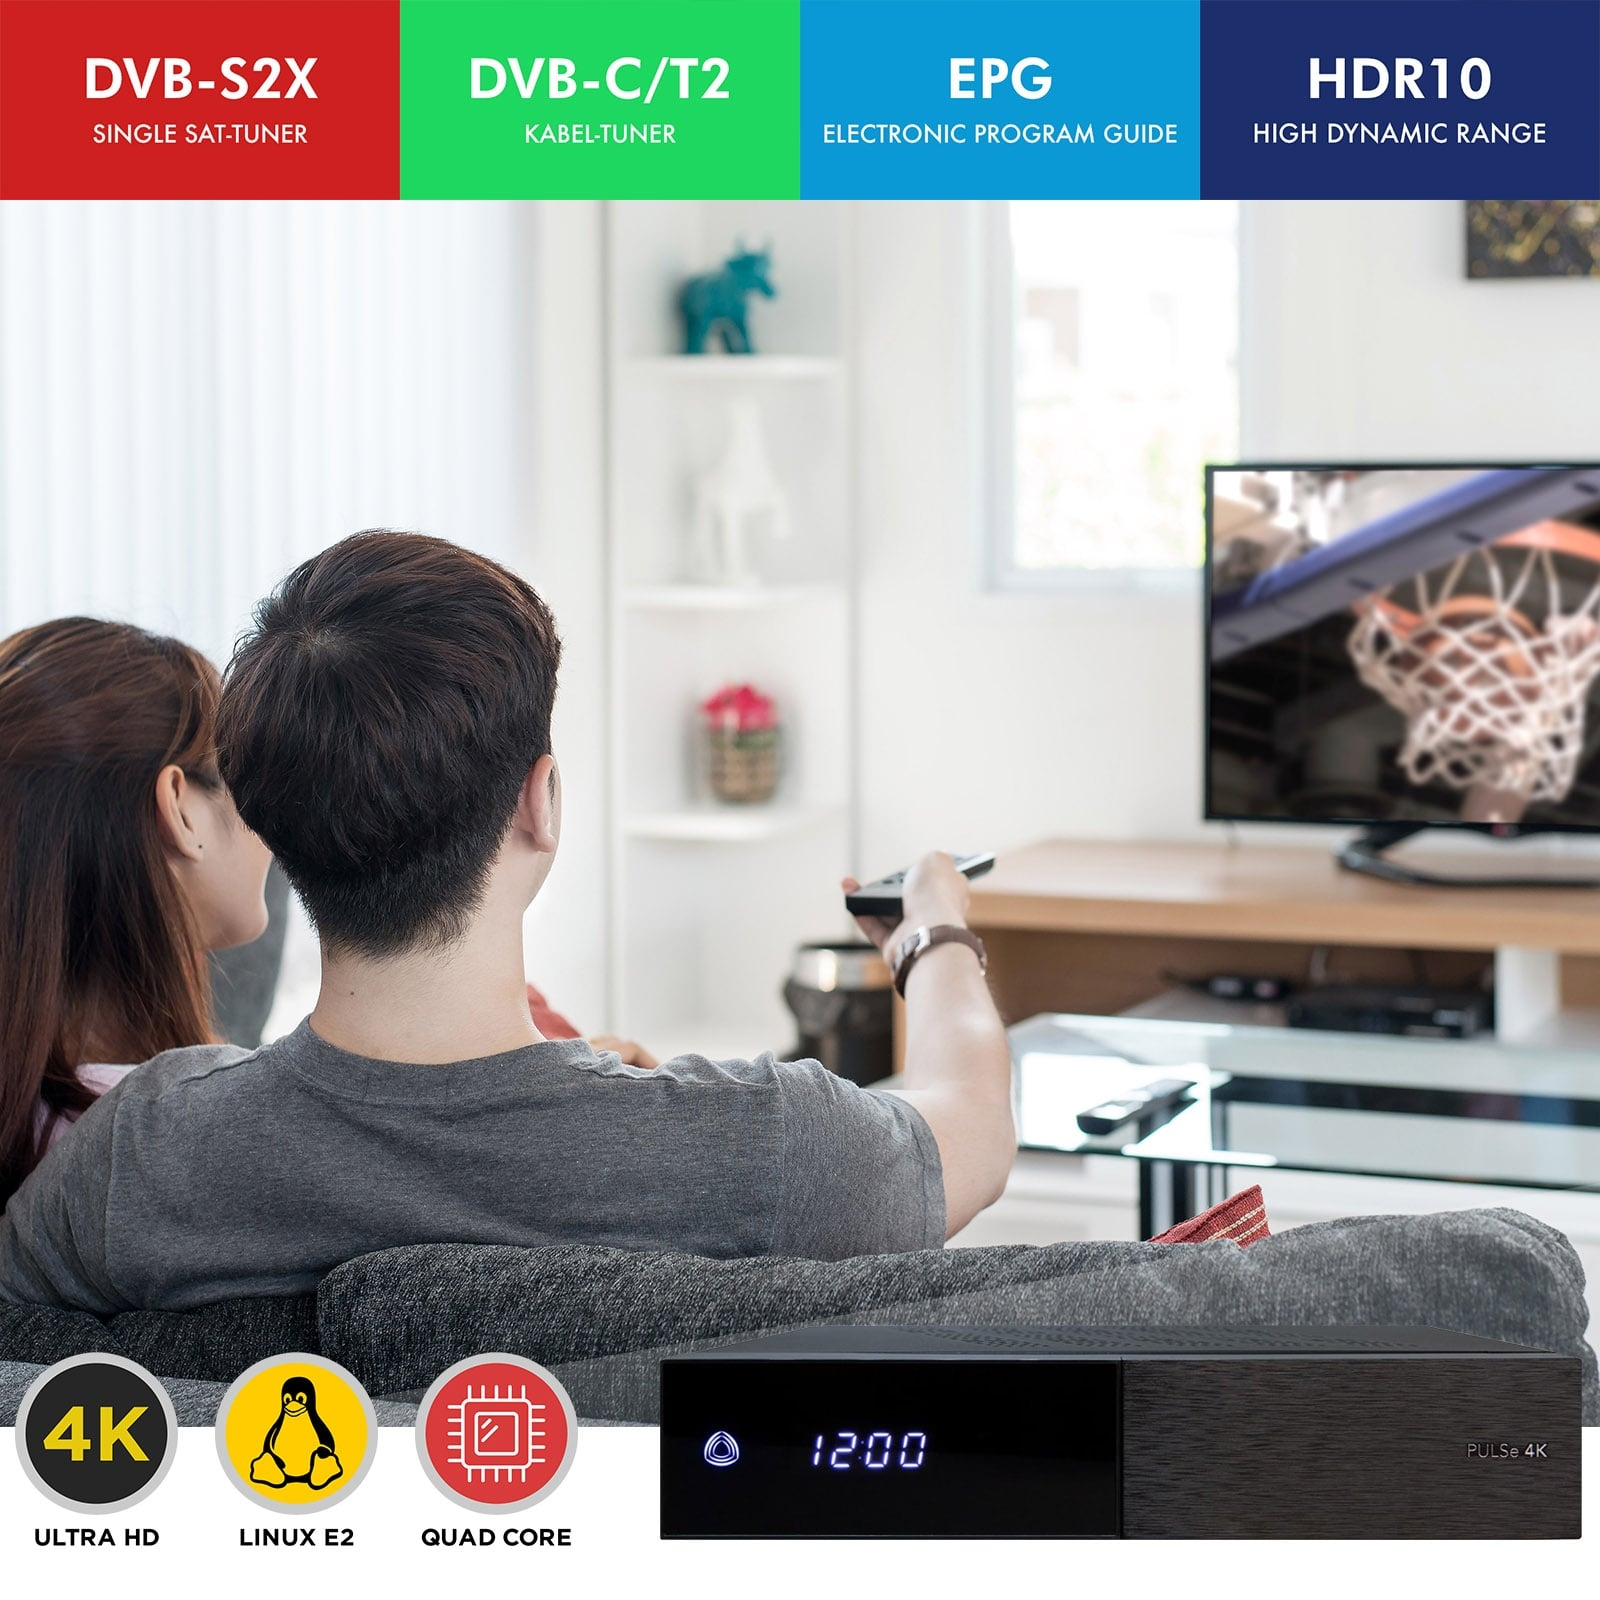 AB-COM PULSe 4K Combo 5TB DVB-S2X Schwarz) Sat-Receiver Tuner, DVB-C/T2 (PVR-Funktion, Twin